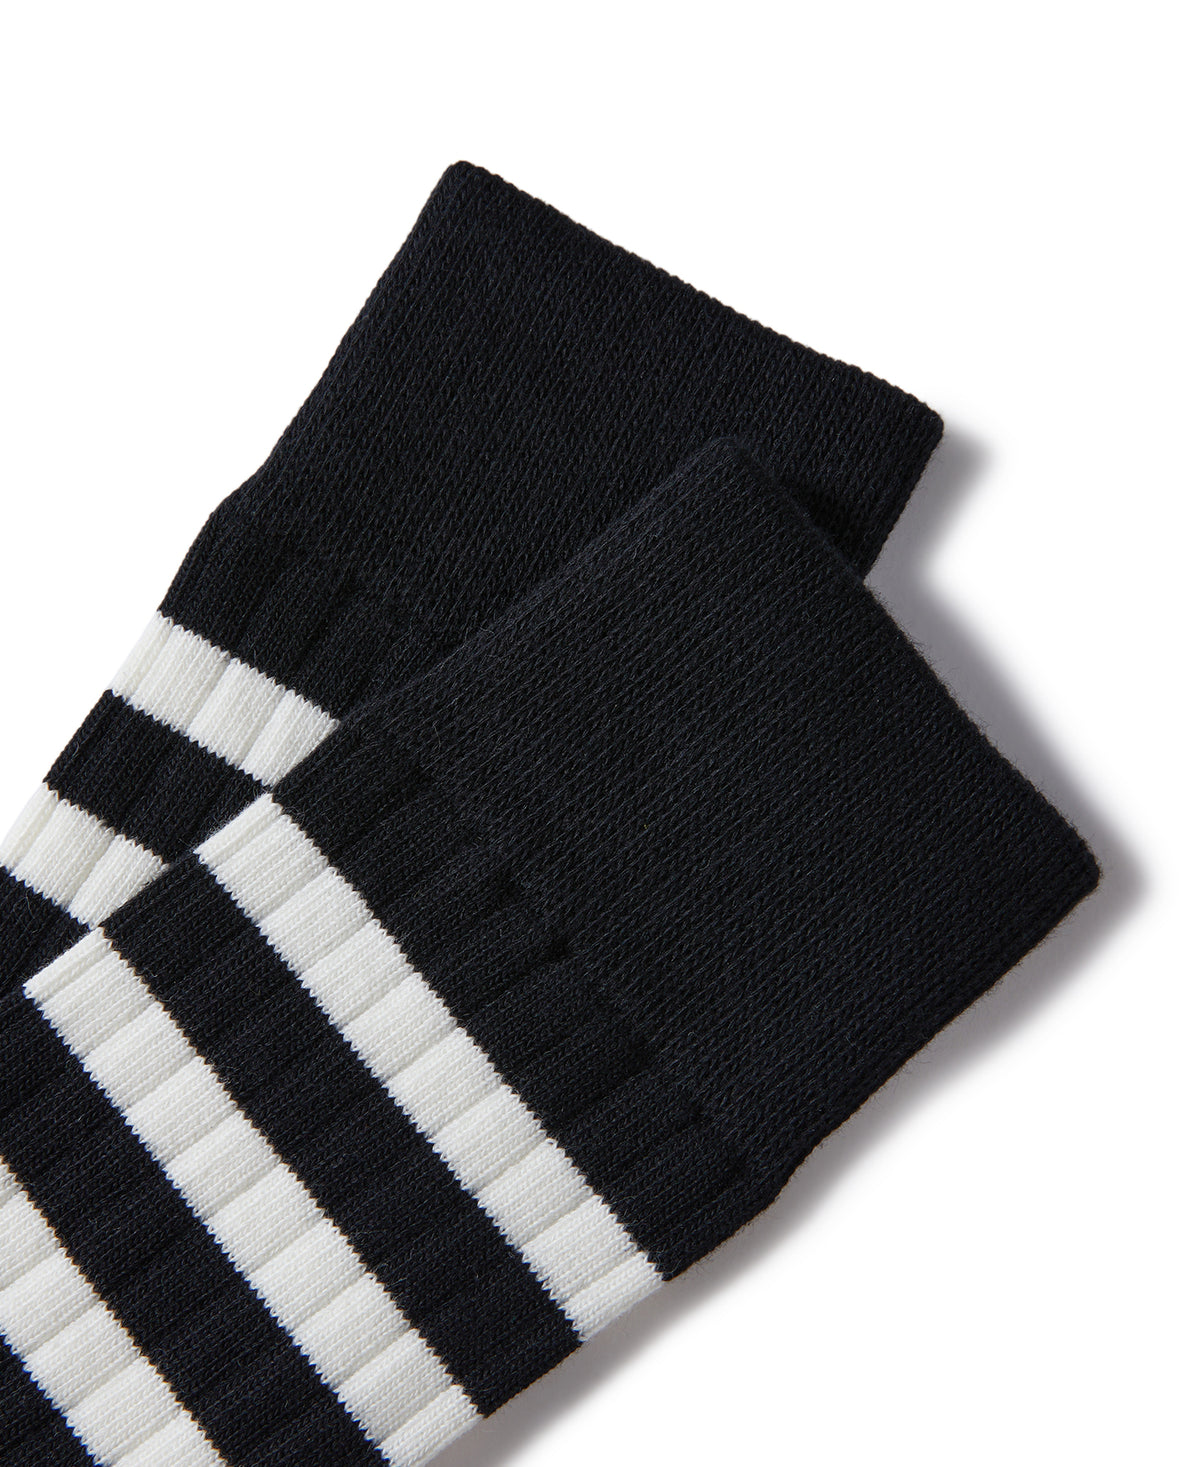 Retro Striped Cotton Socks - Black/White